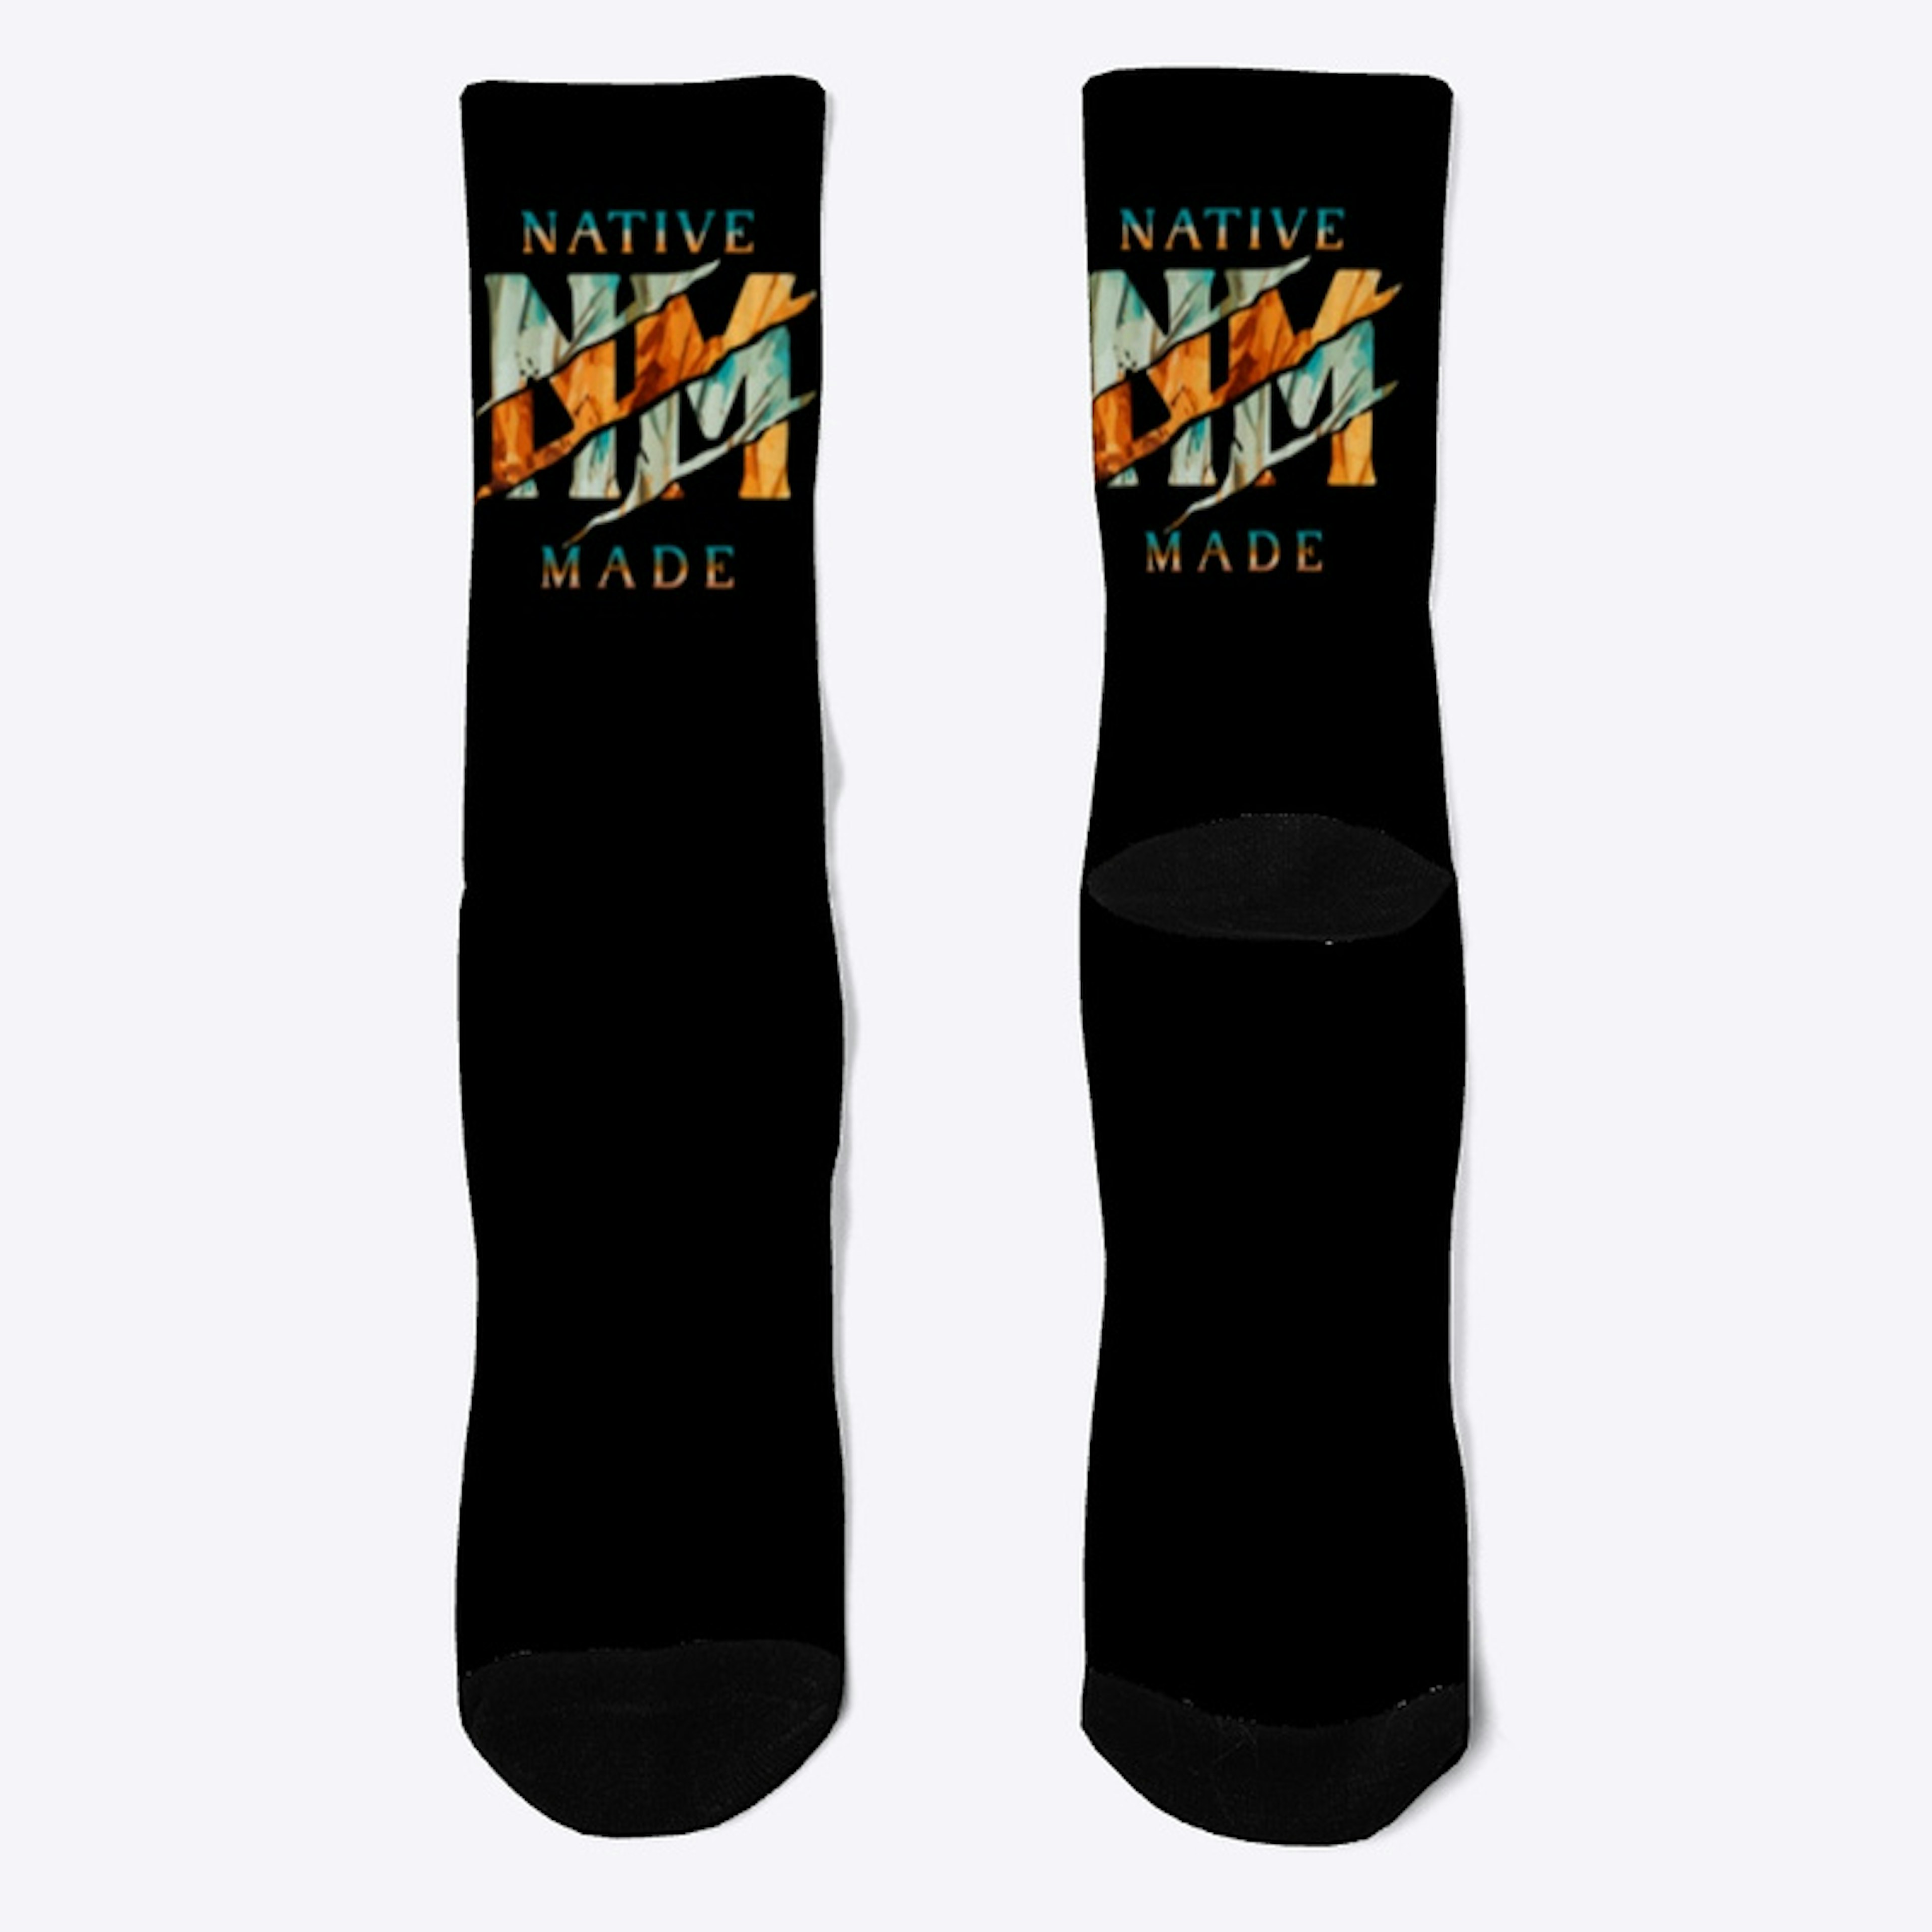 Native Made Socks